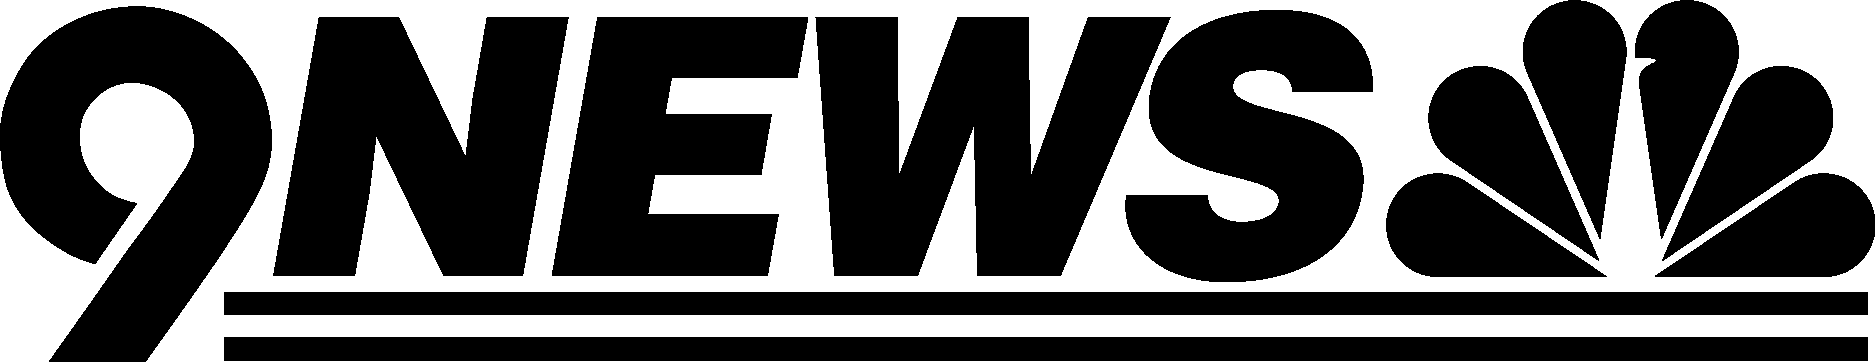 KUSA TV black Logo Vector